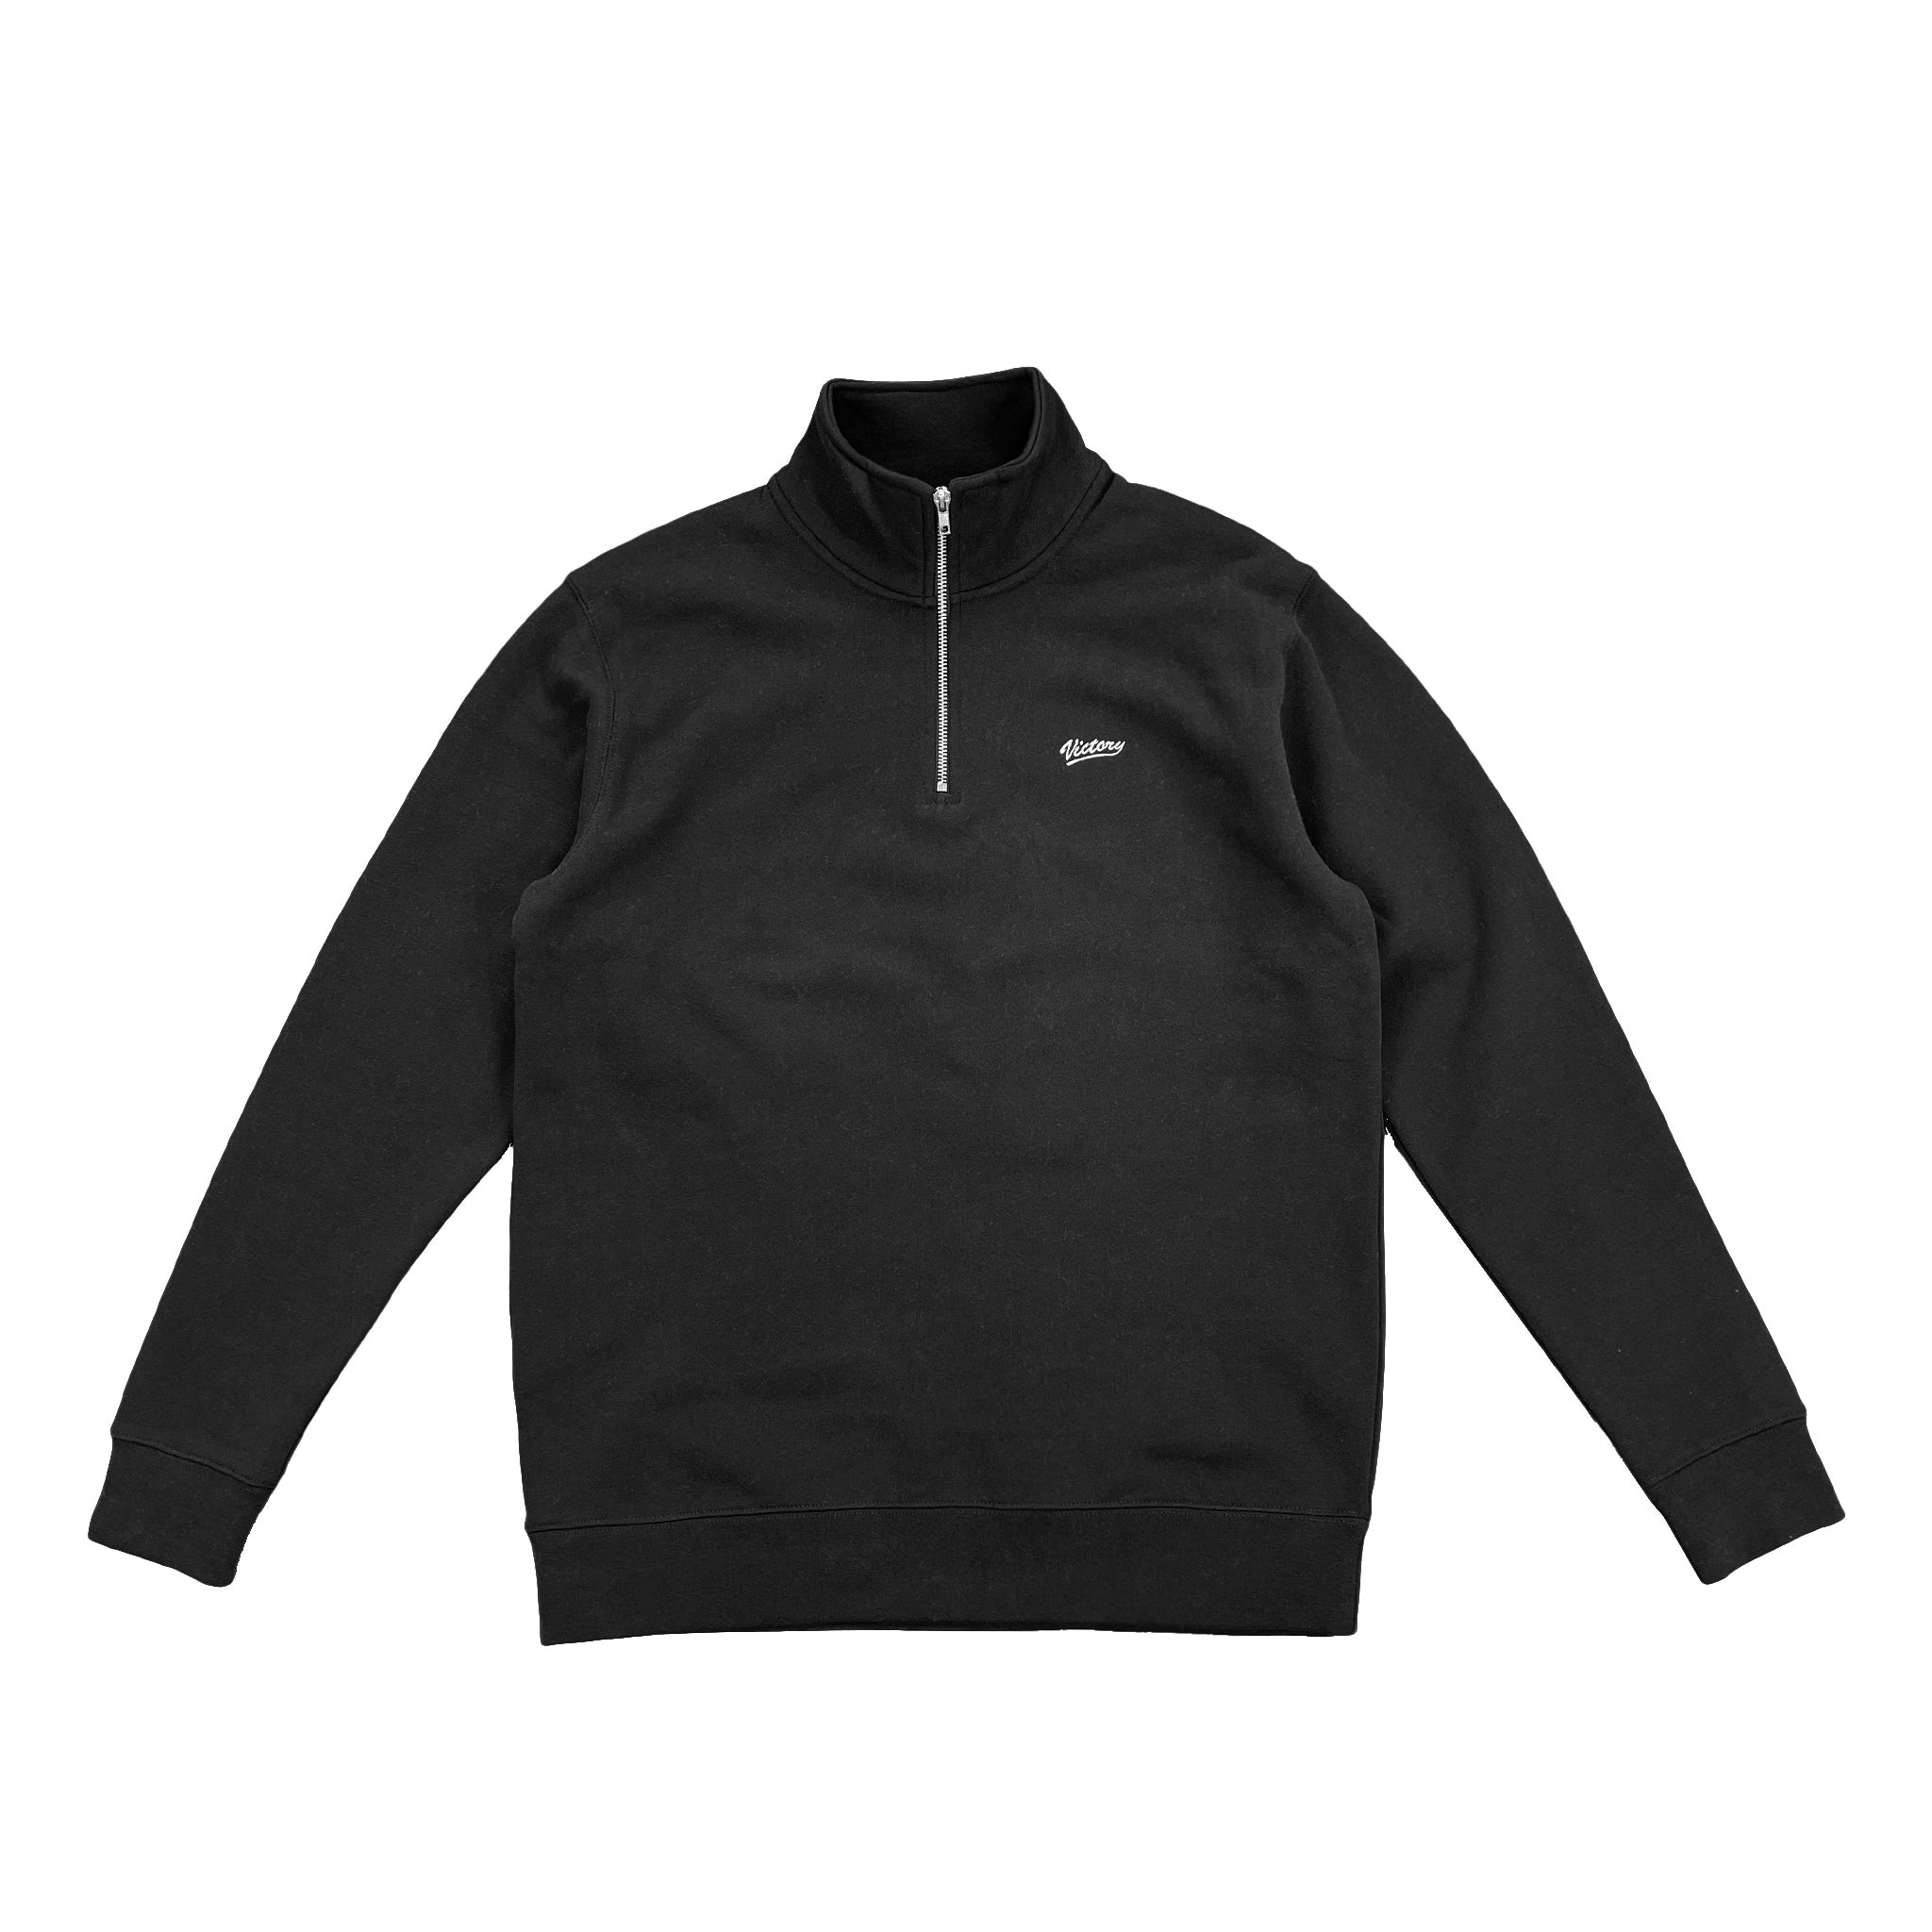 Premium quality 1/4 zip sweatshirt crewneck by New Zealand skate and streetwear clothing label VIC Apparel. Classic minimal design. Regular fit.